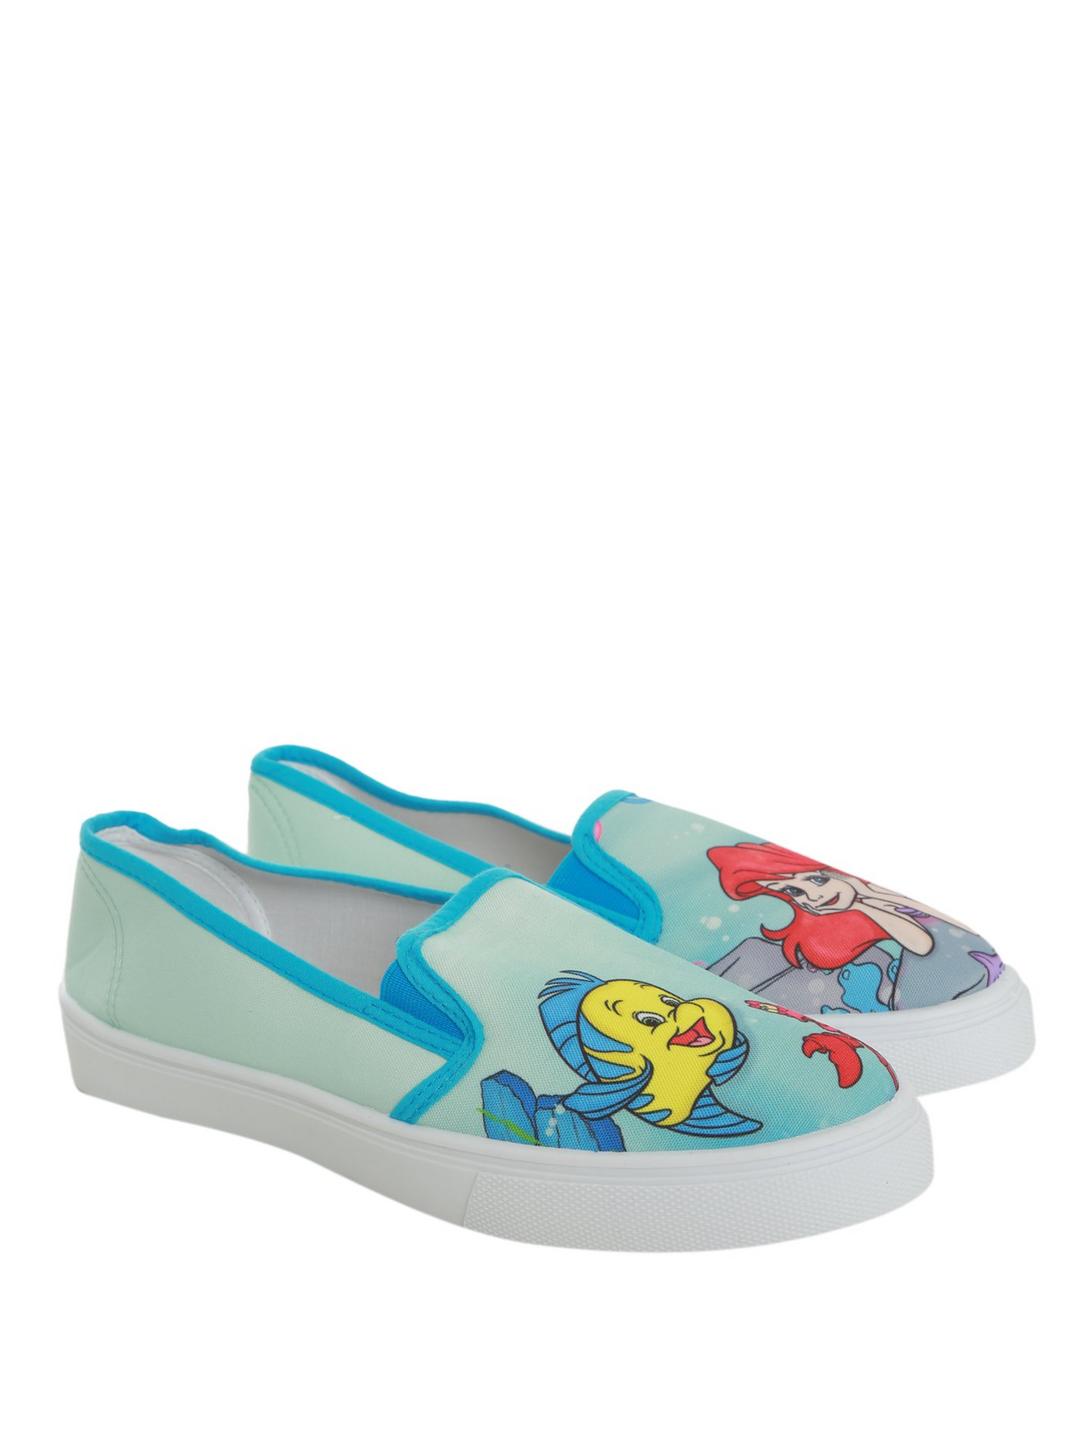 Disney The Little Mermaid Ariel Slip-On Sneakers, LIGHT BLUE, hi-res